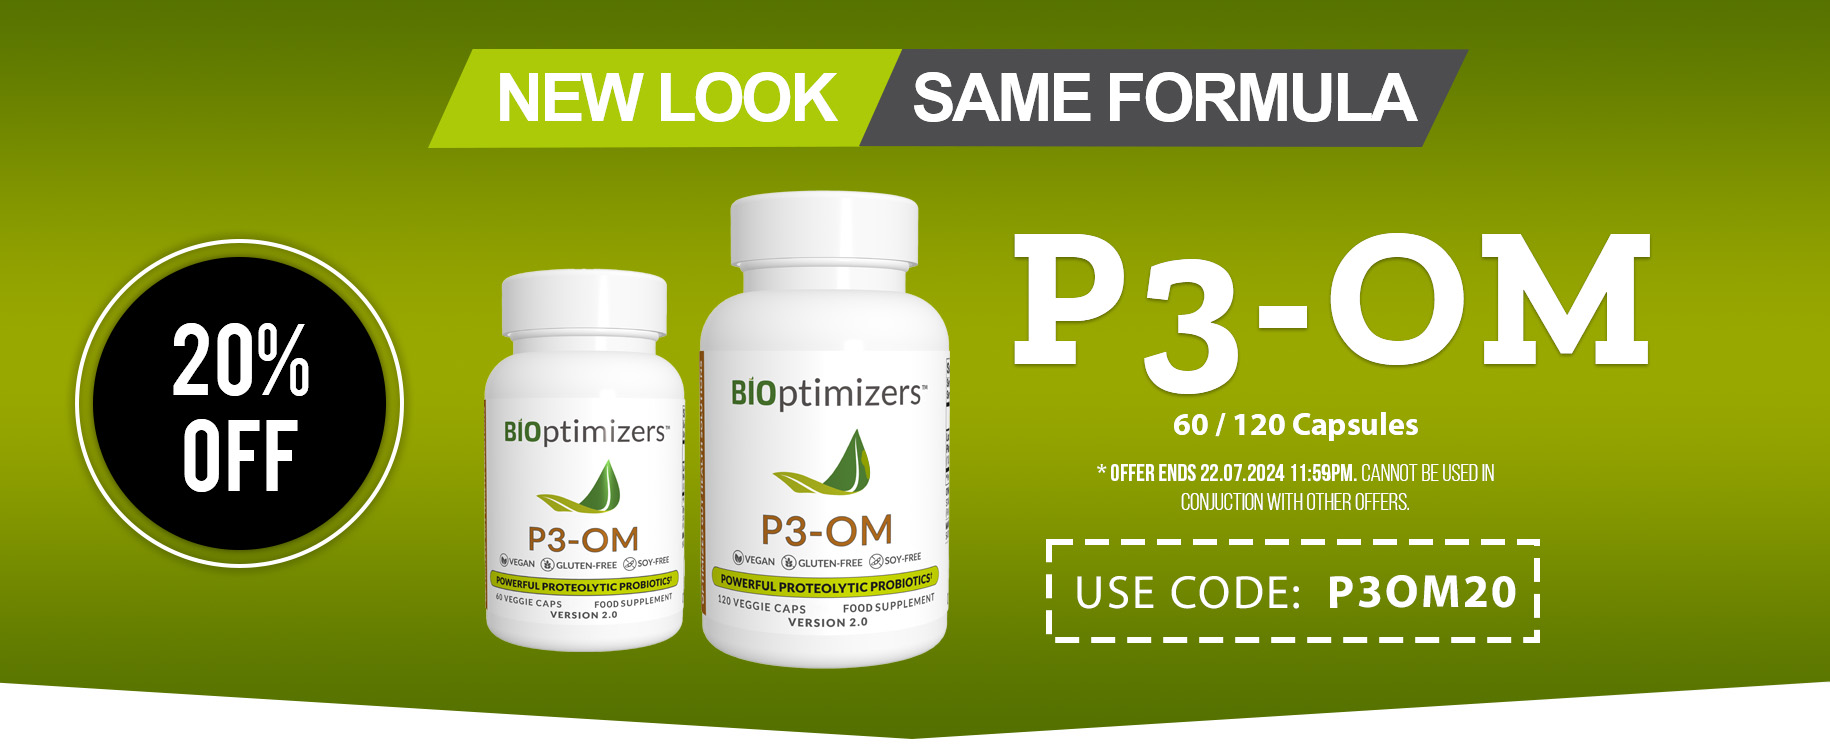 Bioptimizers P3-OM supplements